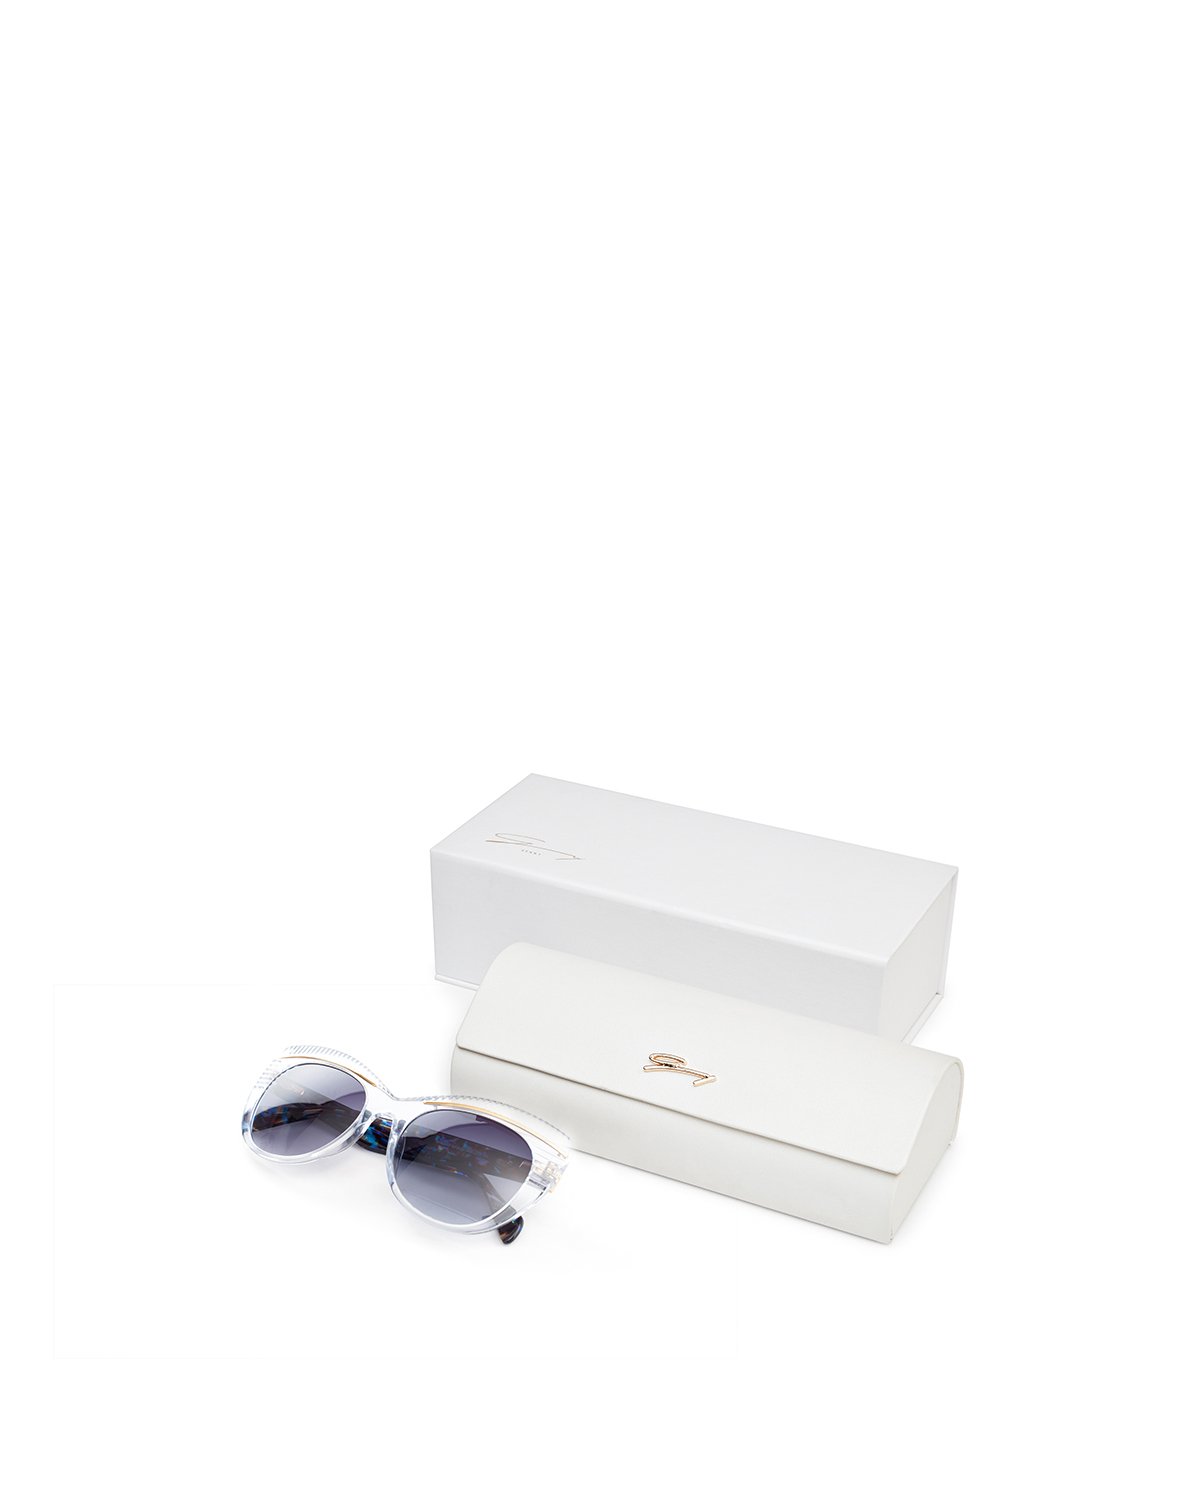 Trasparent cat-eye sunglasses | Accessories | Genny